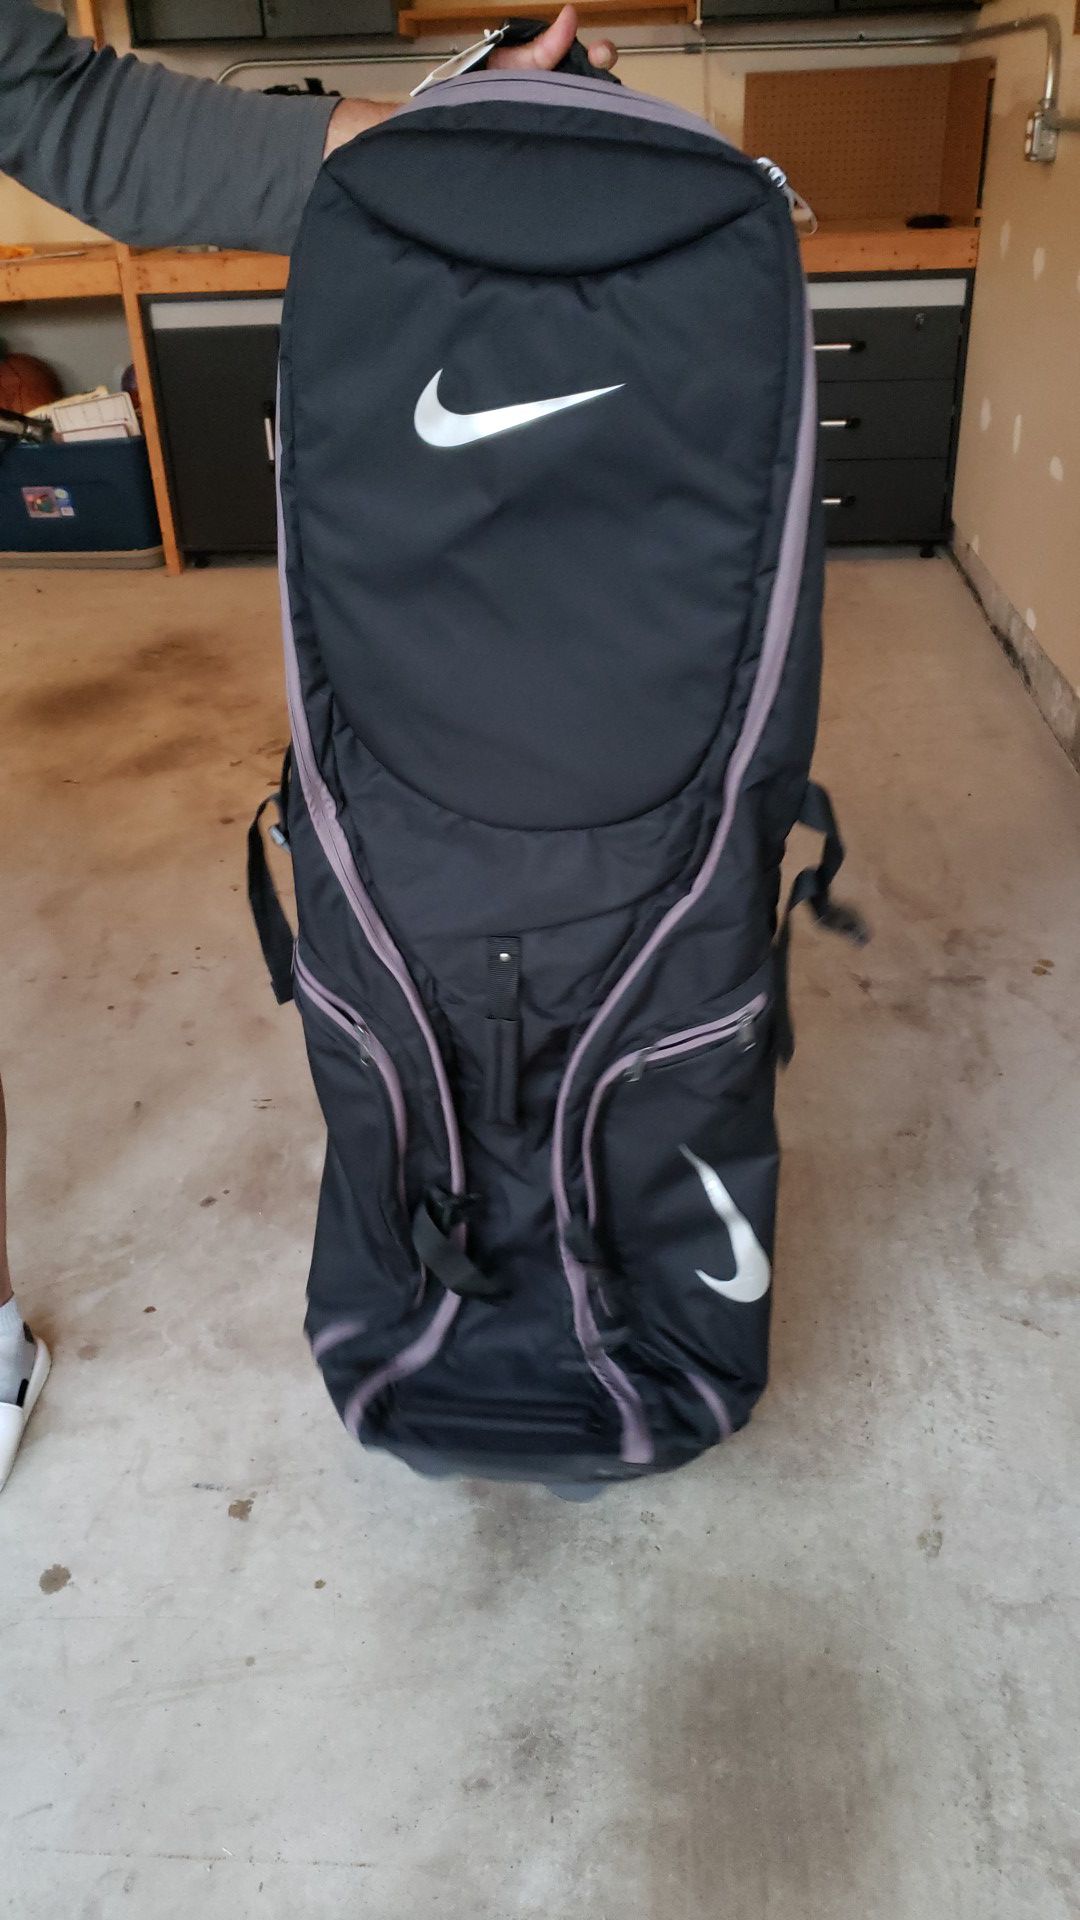 Nike Golf Travel Bag